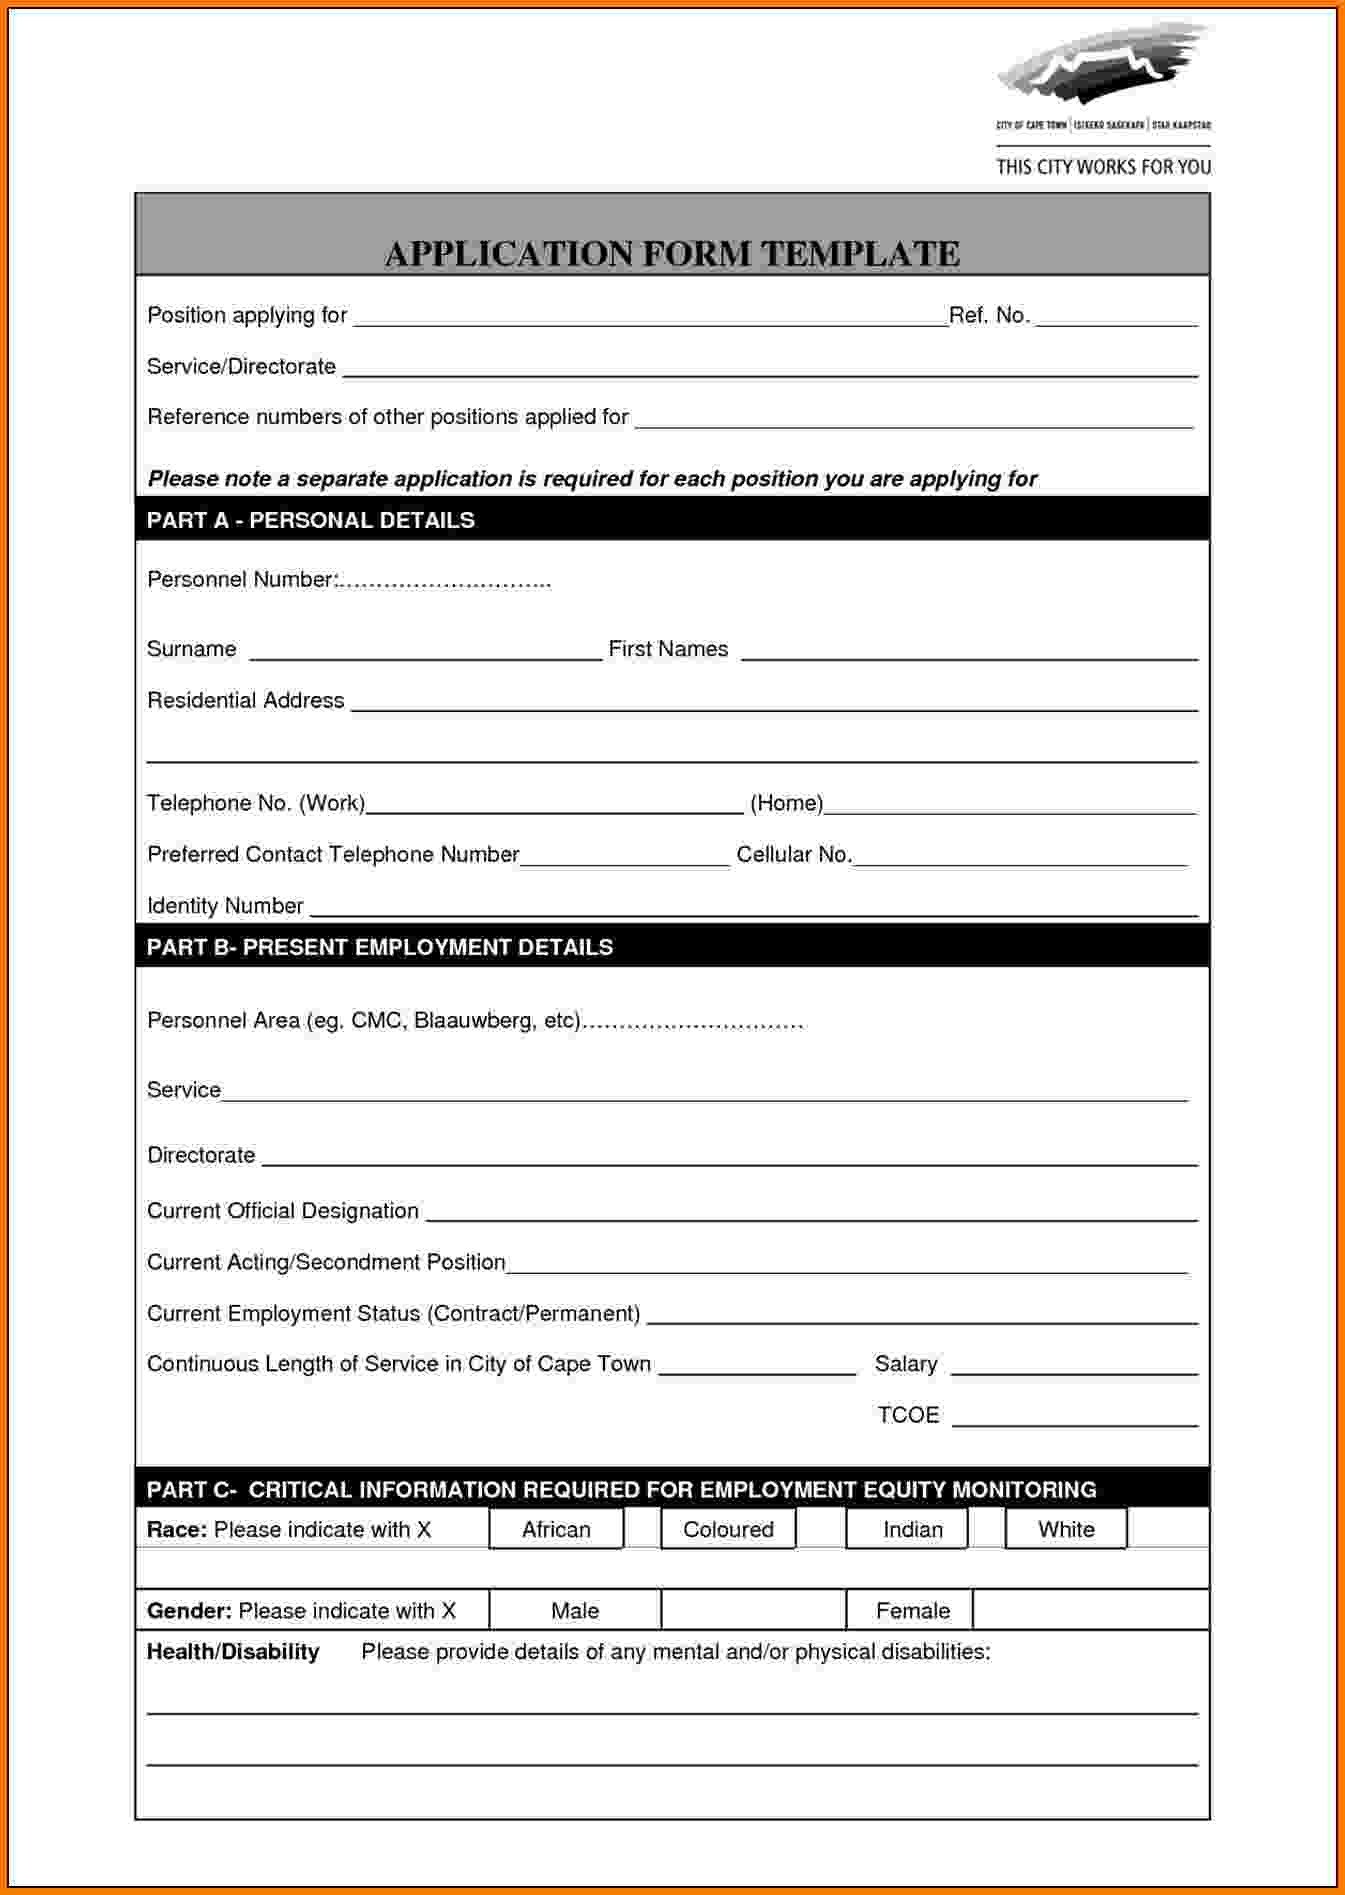 Standard Job Application Template 8 Application form Template